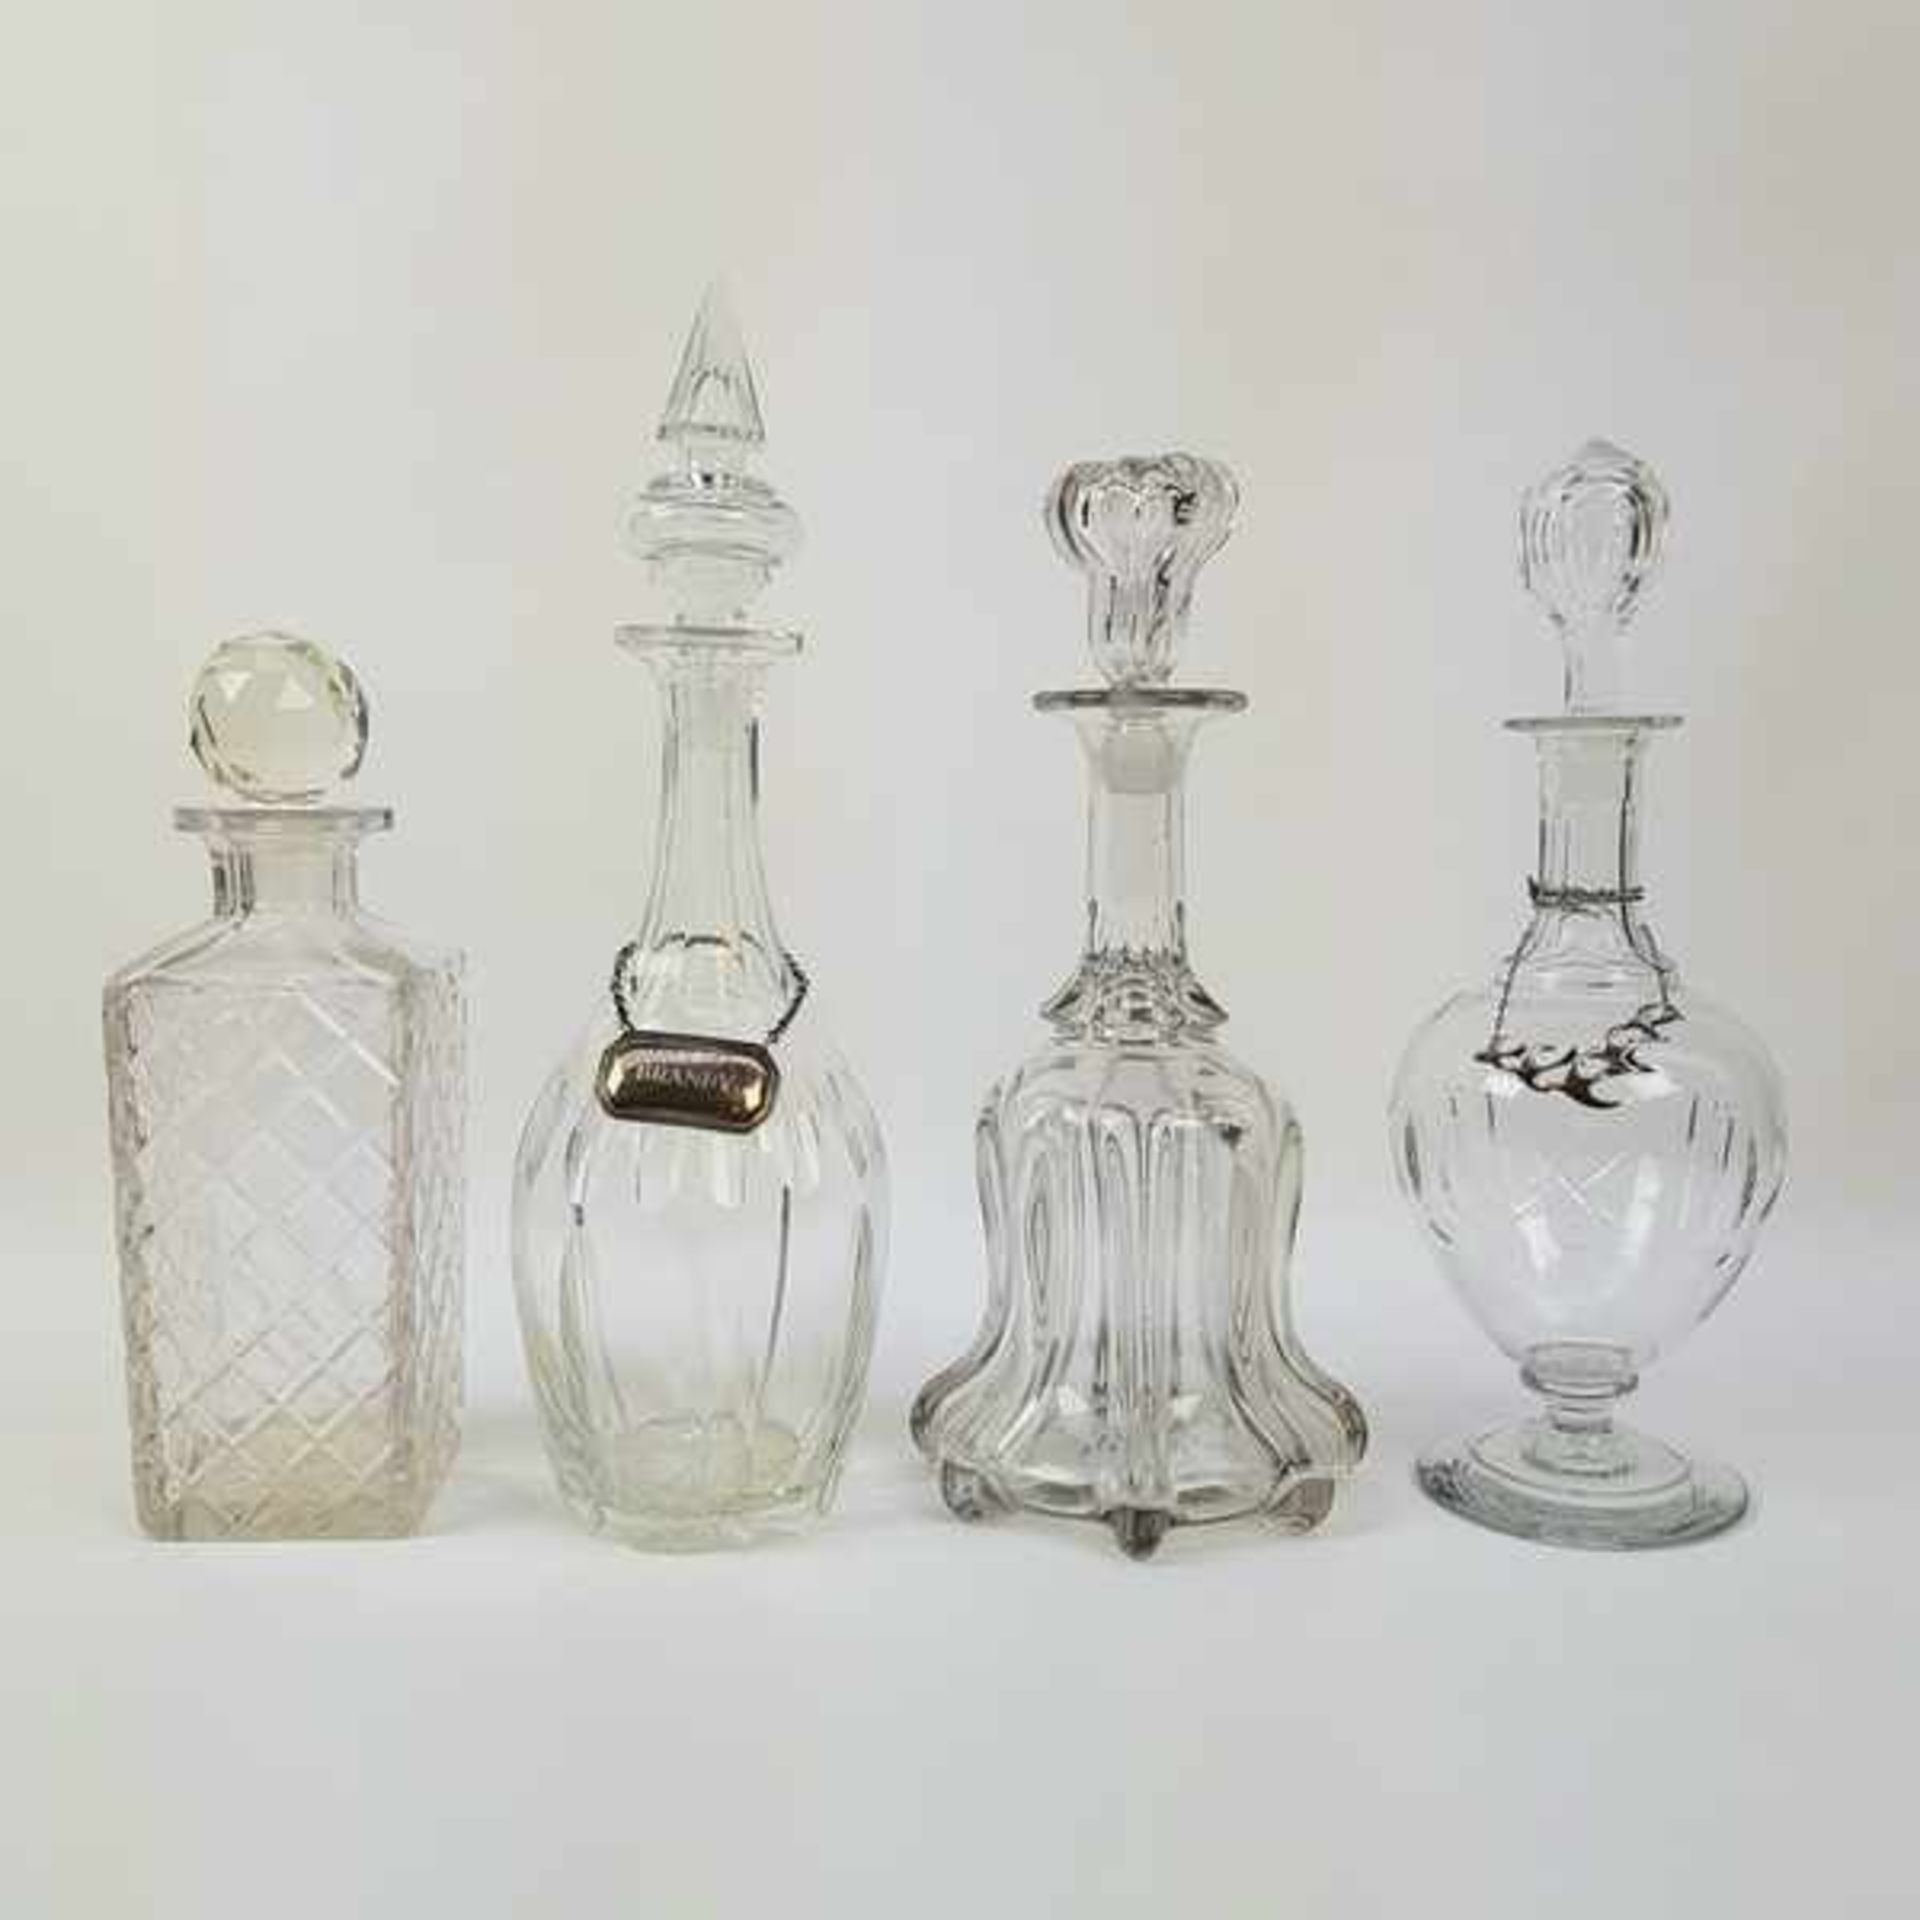 (Curiosa) Glazen karaffenVier glazen karaffen, begin 20e eeuw. Conditie: Een karaf is beschadigd.